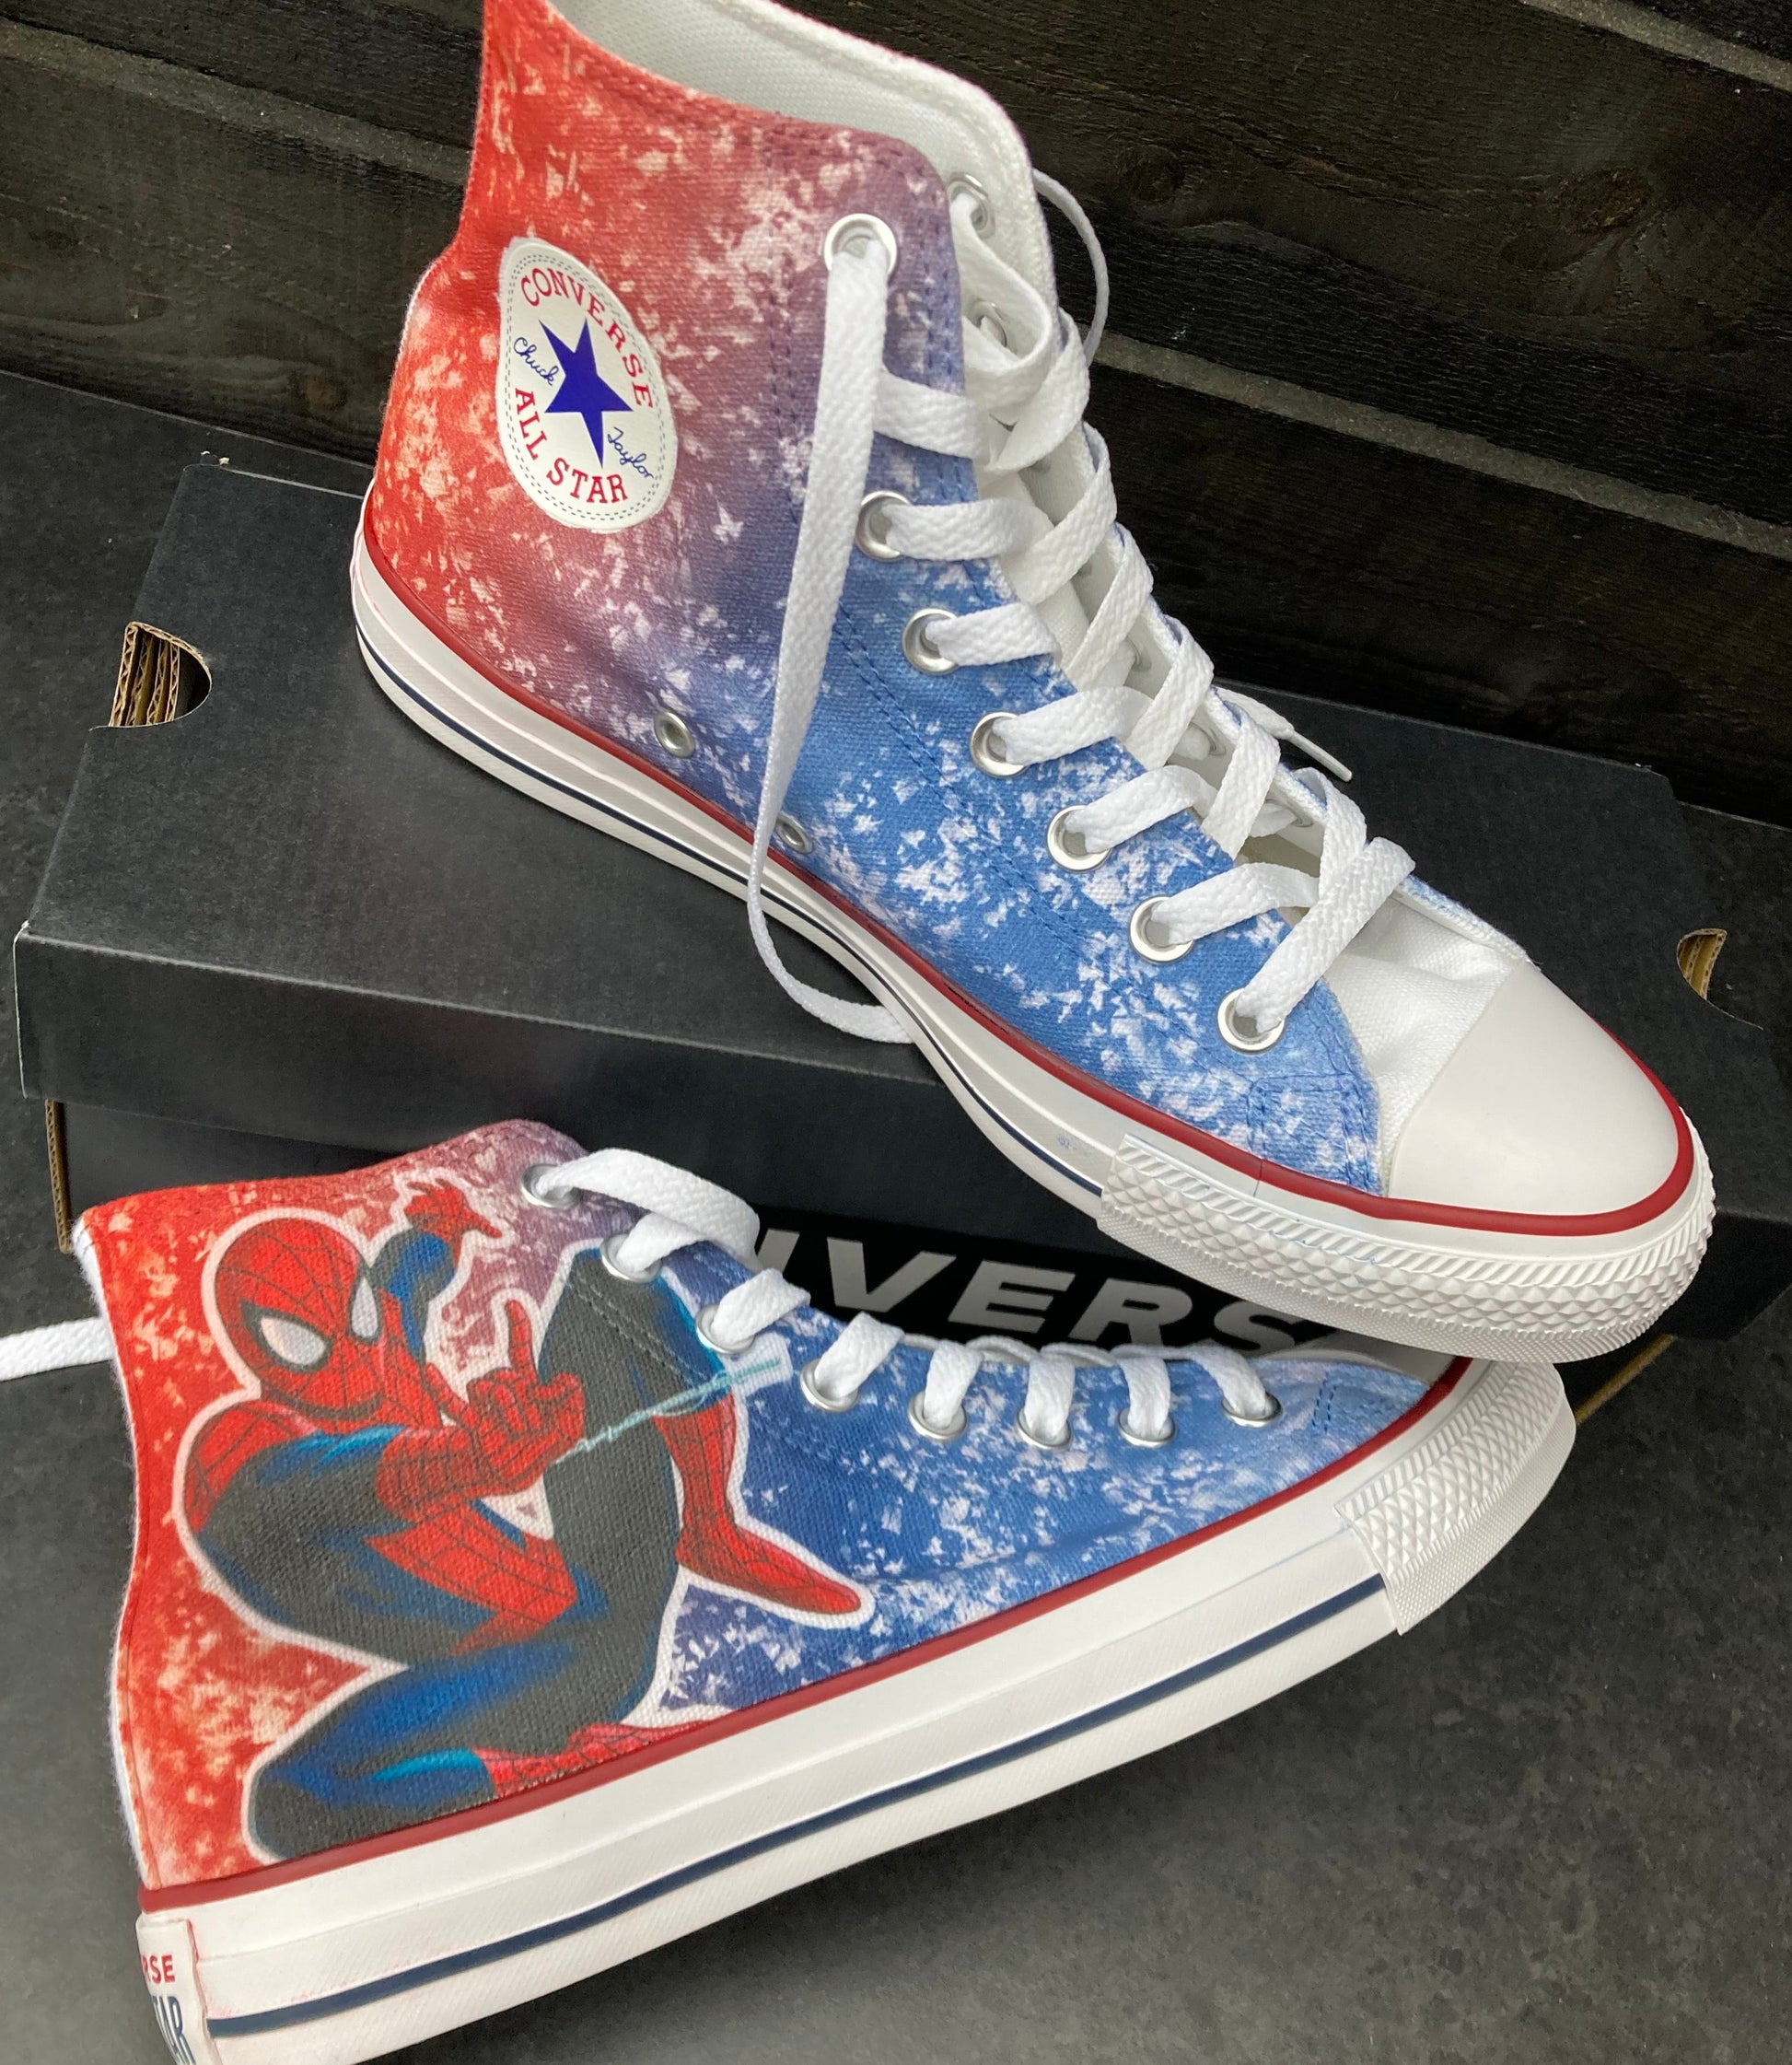 spider-man converse custom shoes